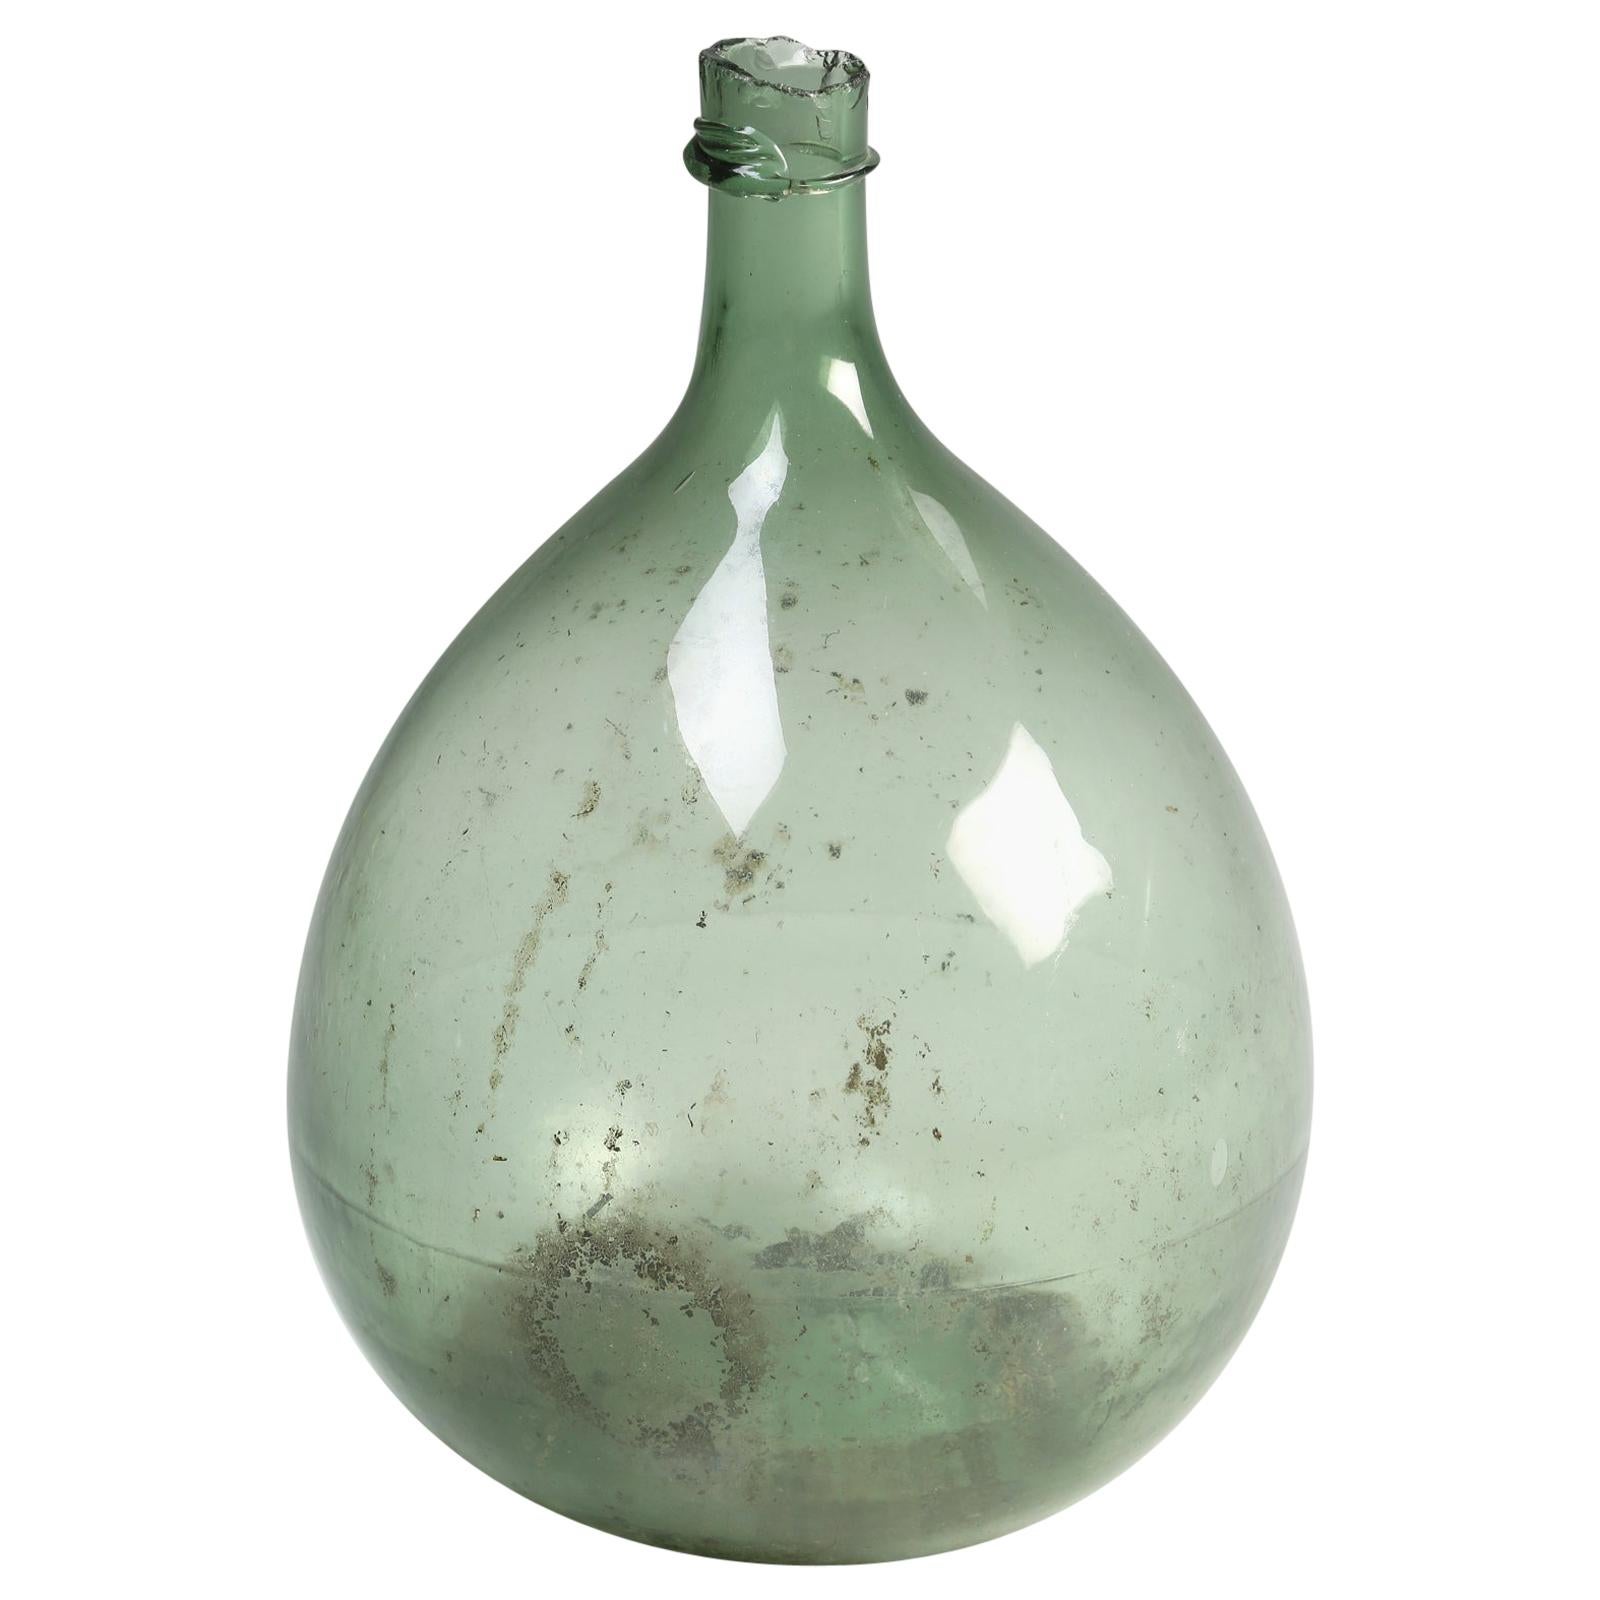 https://a.1stdibscdn.com/antique-french-demijohn-or-carboy-large-glass-bottle-for-sale/1121189/f_195530221593191074026/19553022_master.jpg